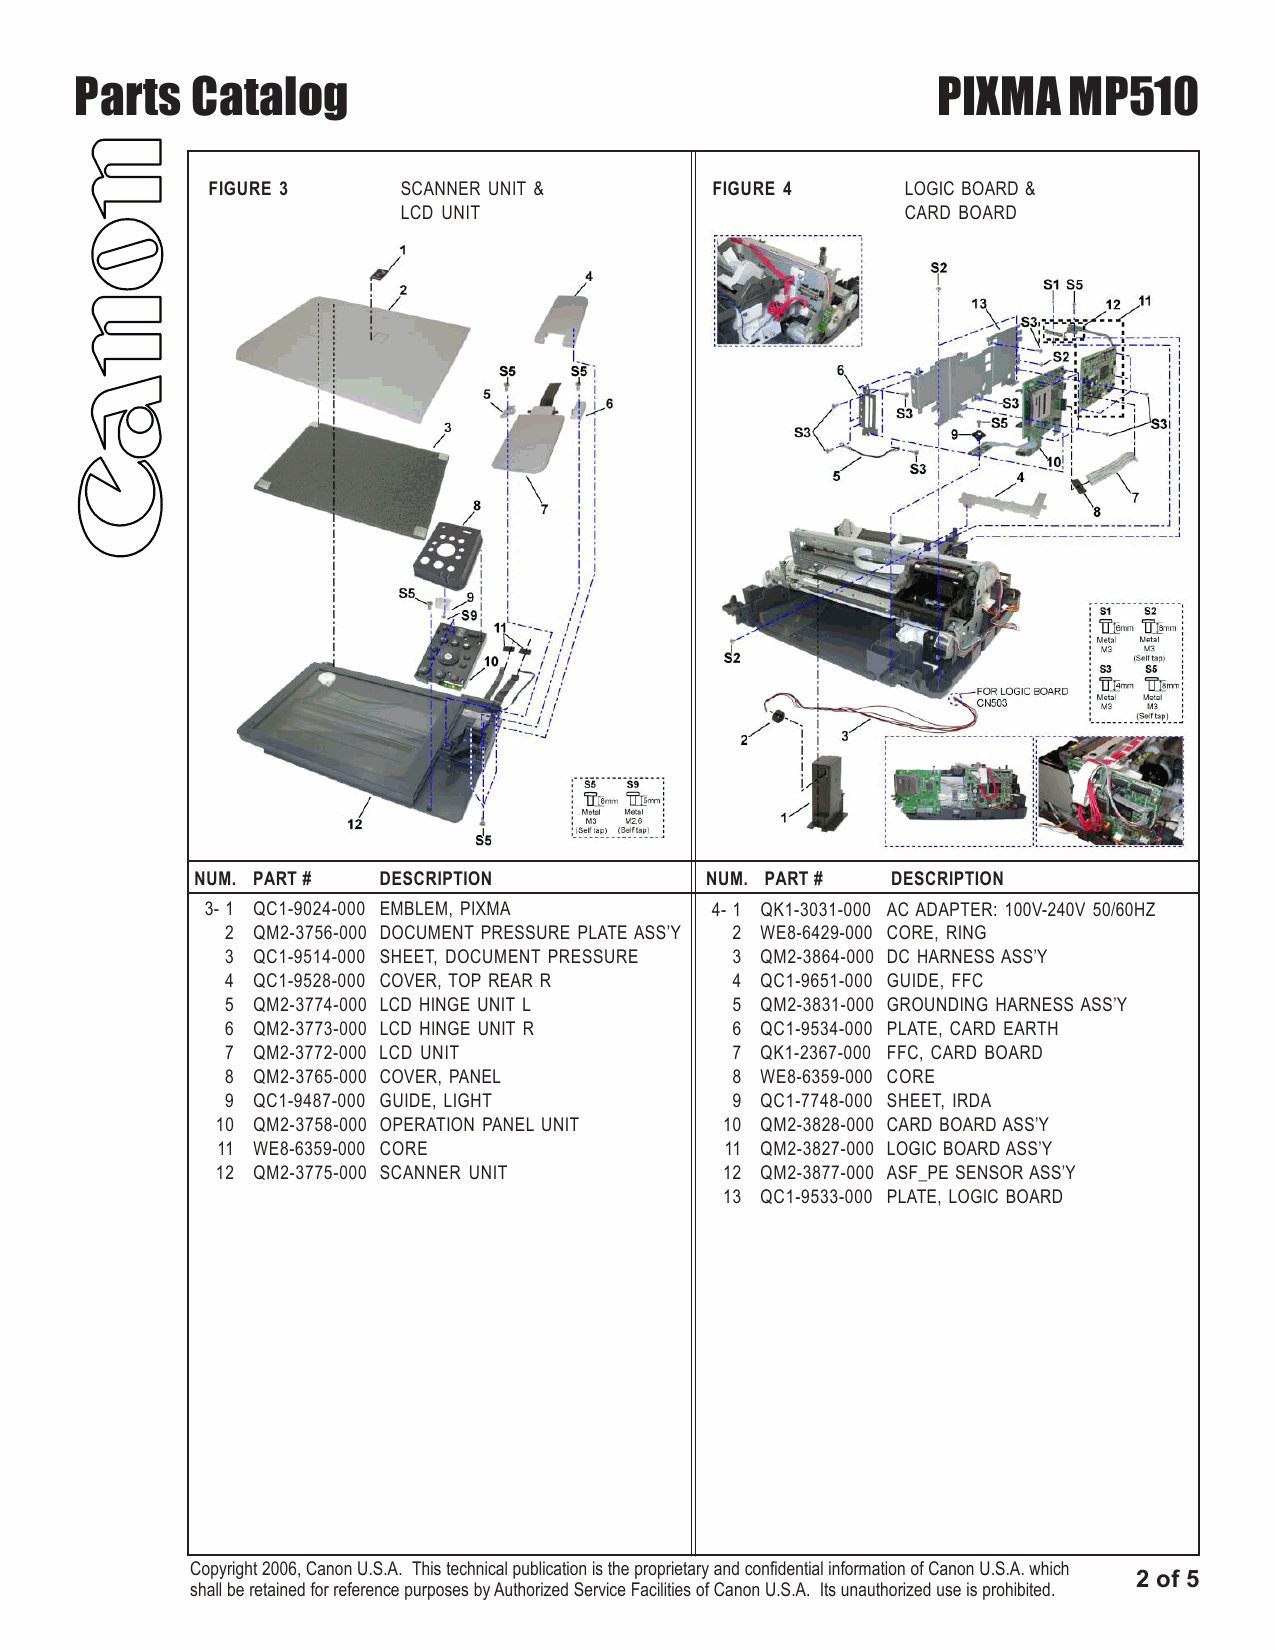 Canon PIXMA MP510 Parts Catalog Manual-3